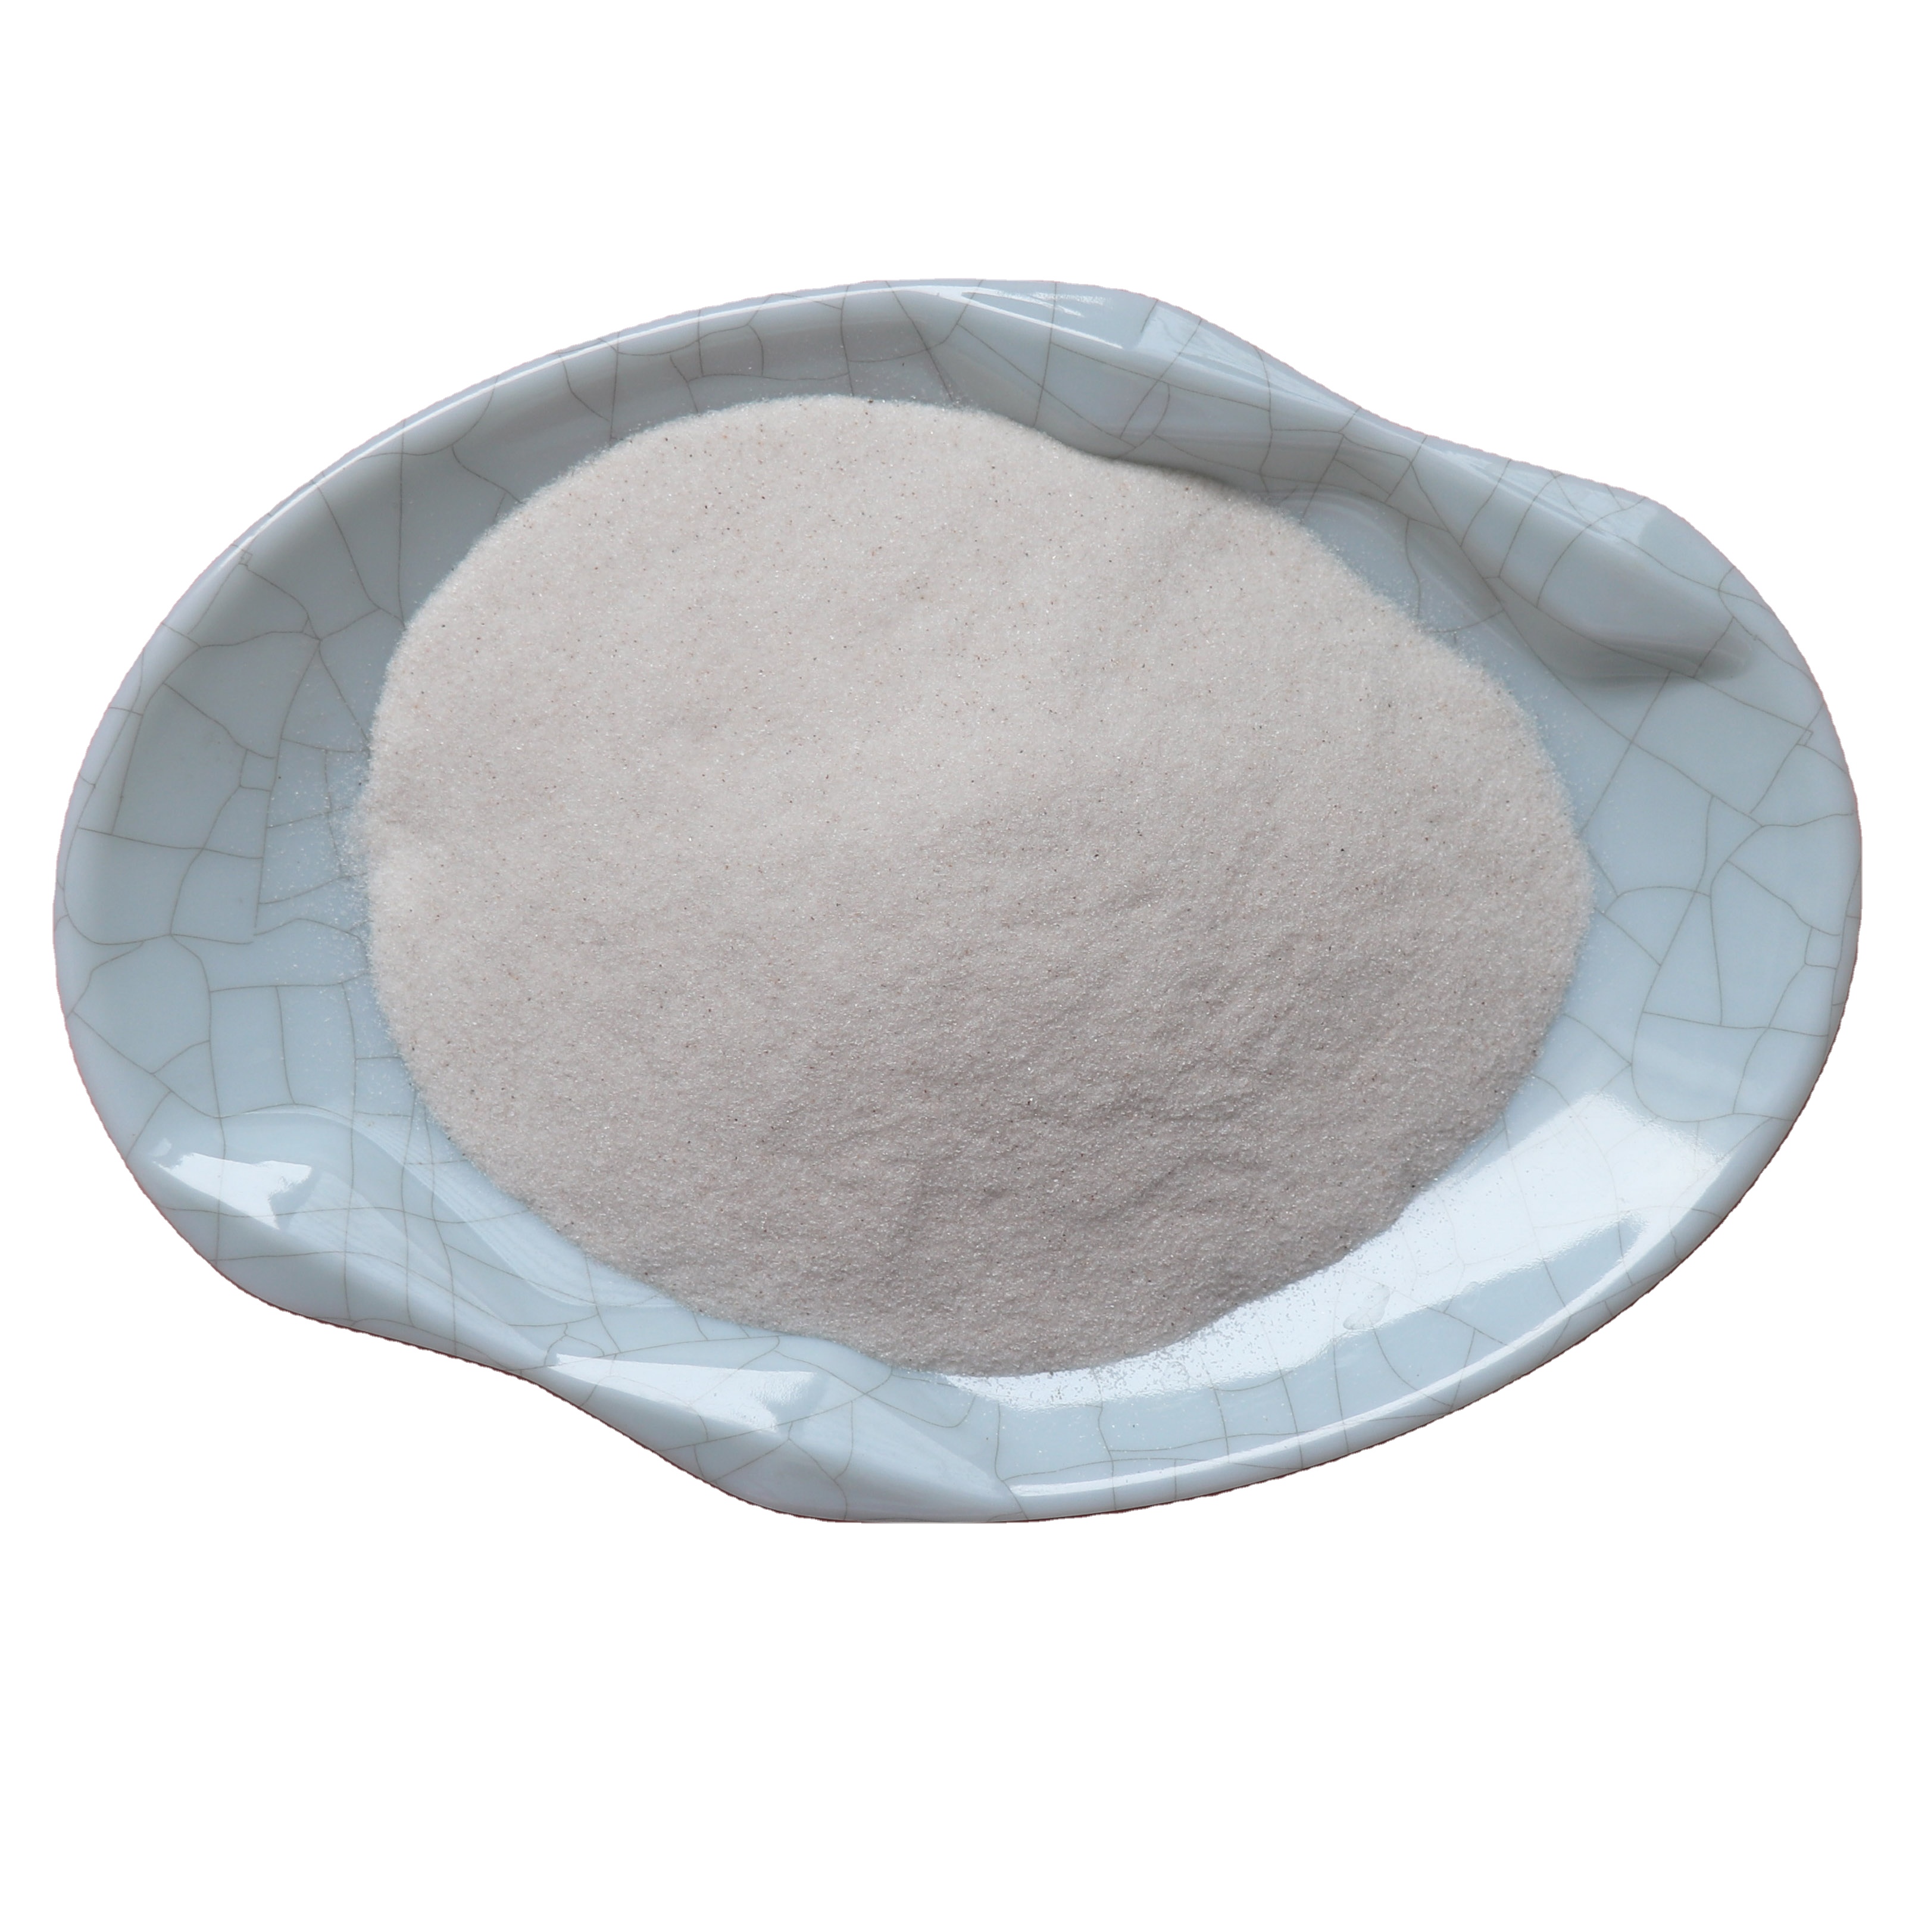 2022 Good Quality Cat Litter Sand - 50-150 Micron high grade fused powder pure fine white colored quartz silica sand – Chico Featured Image